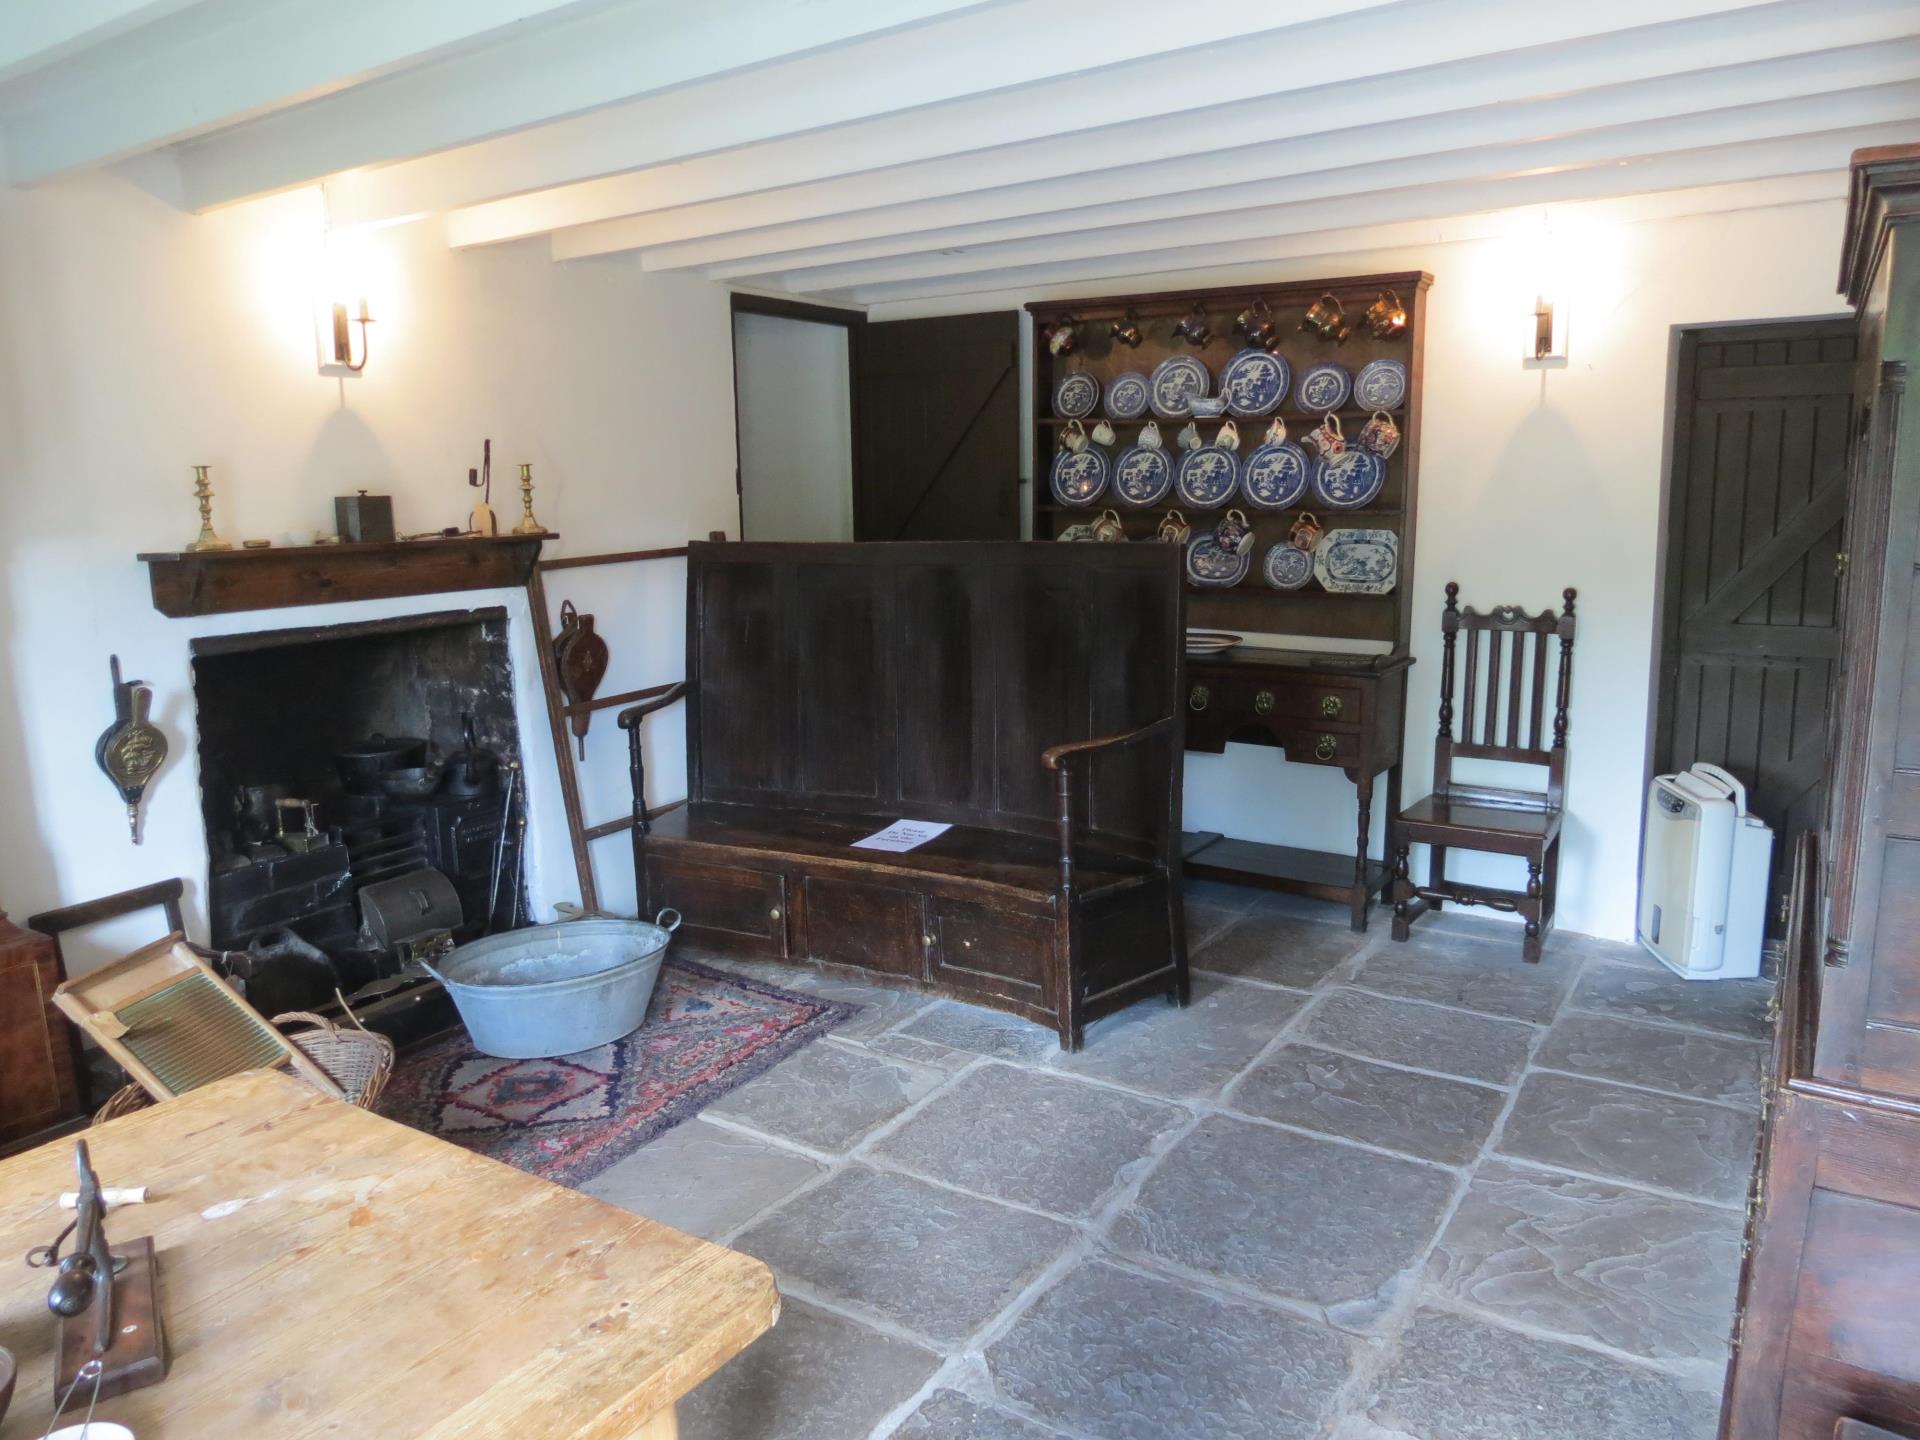 Cottage interior - Joseph Parry's